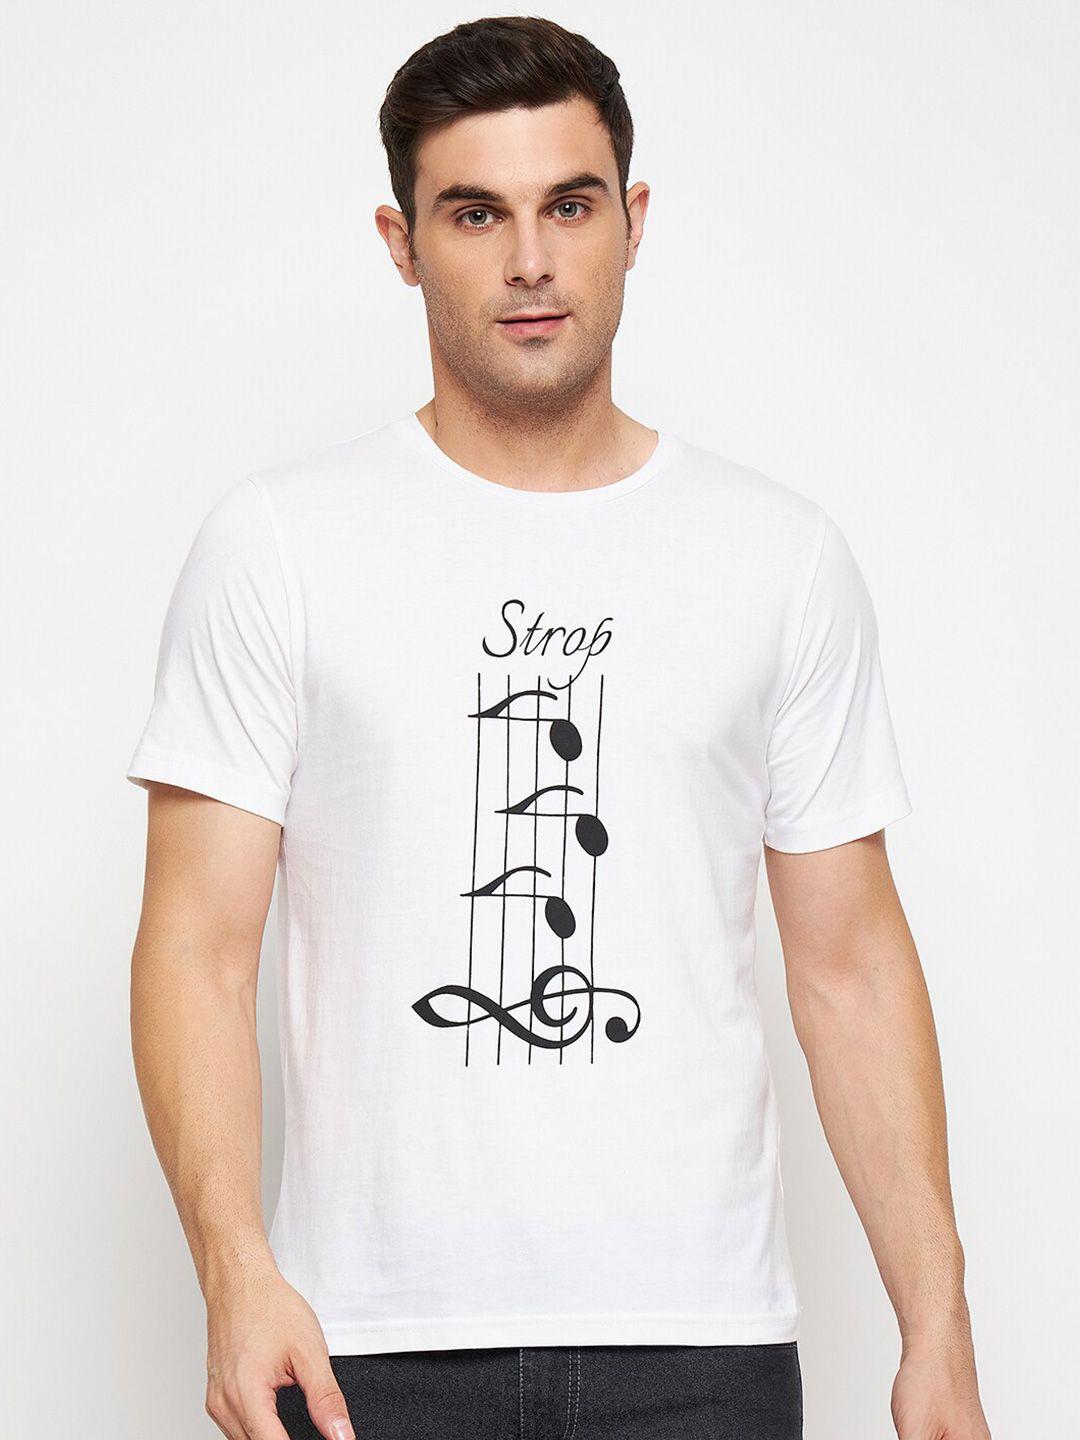 strop graphic printed cotton t-shirt